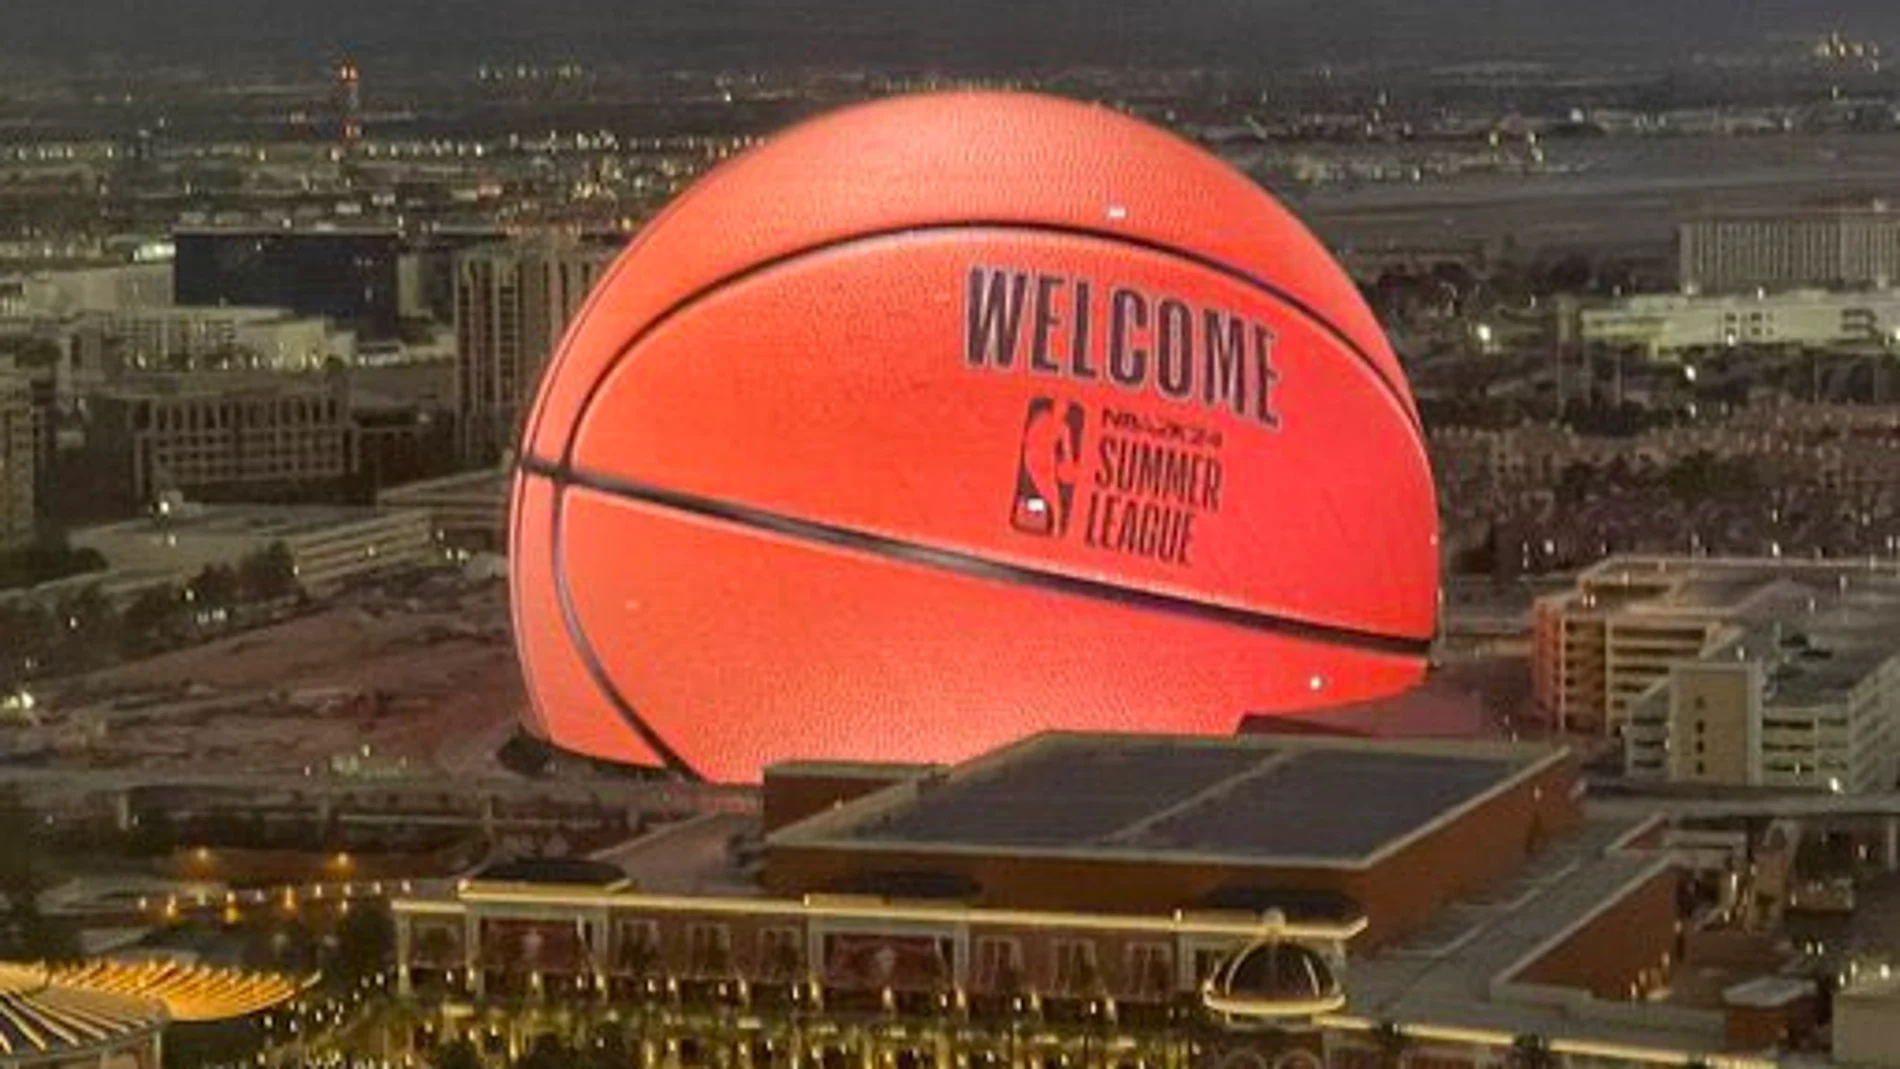 La espectacular esfera ocular de Las Vegas ha costado de 2.3 mil millones